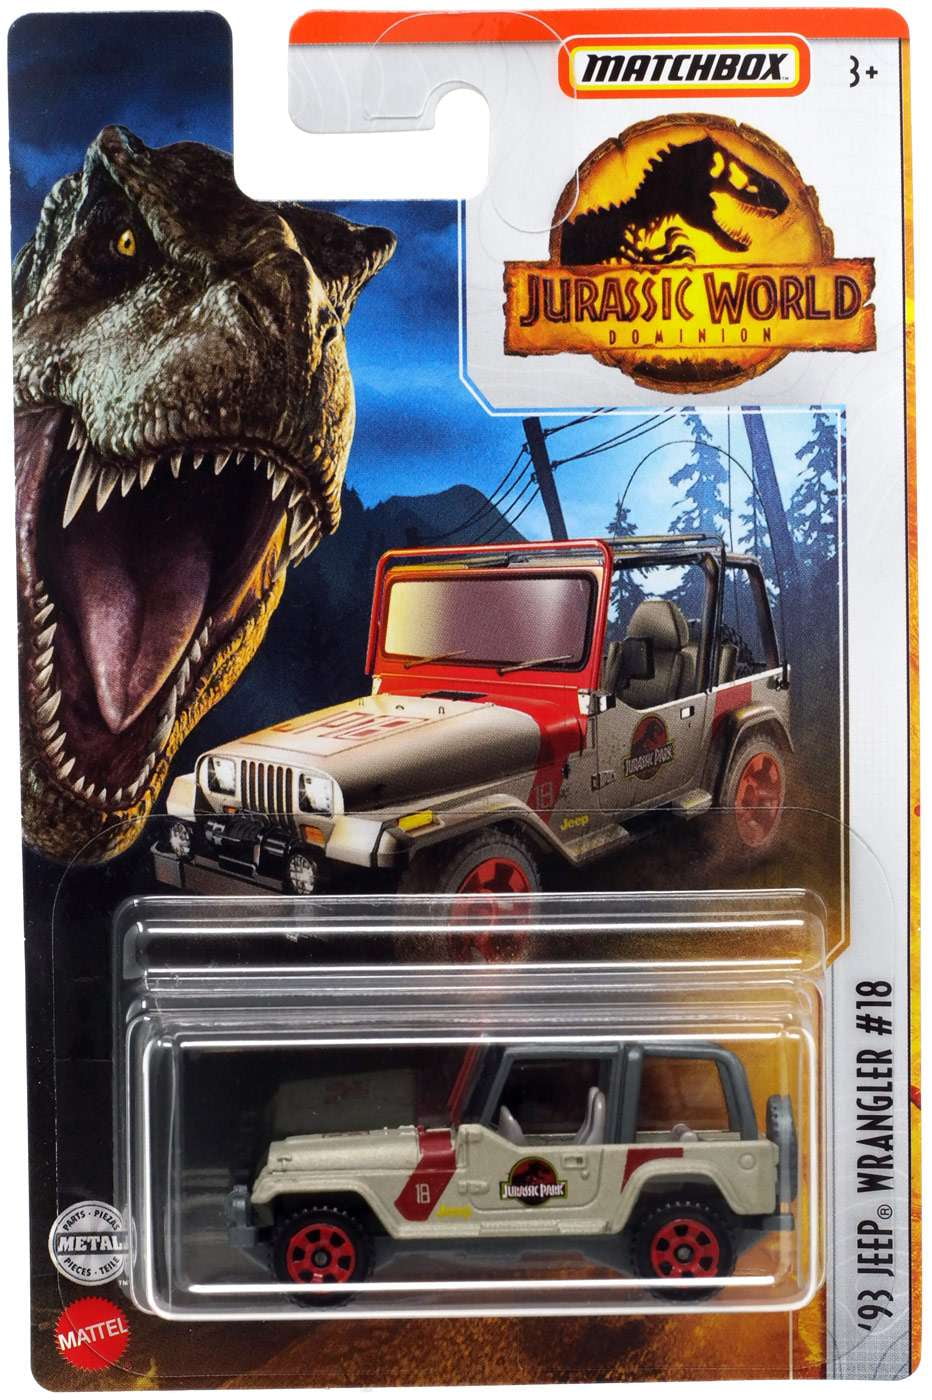 Jurassic World Dominion Matchbox '93 Jeep Wrangler #18 Diecast Car -  